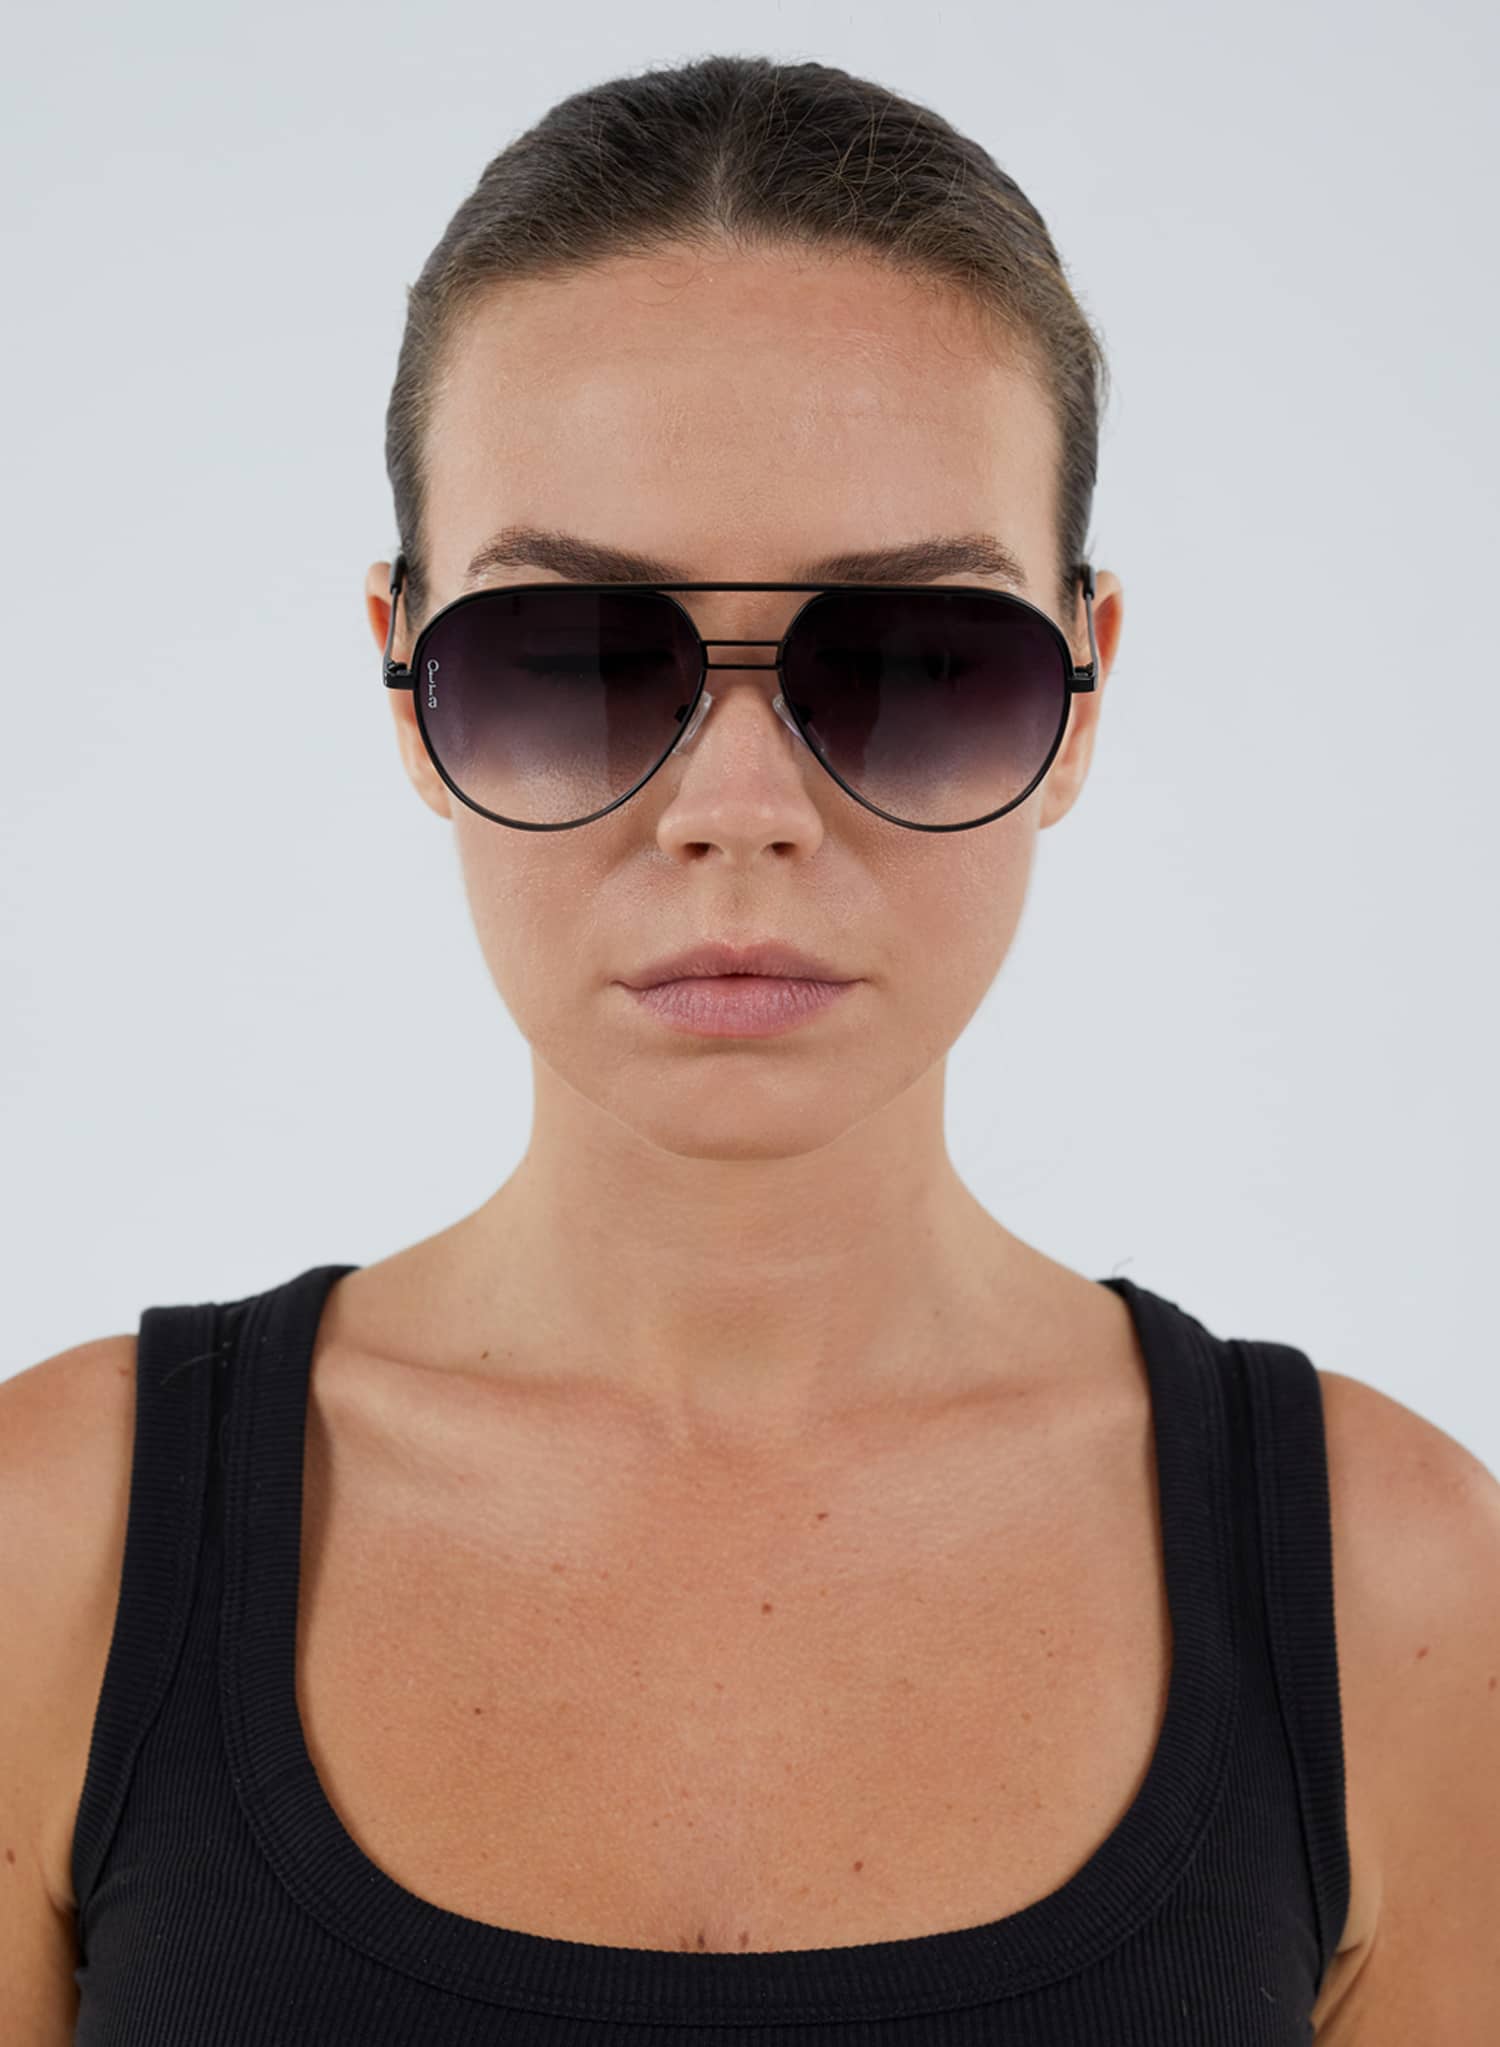 Model wearing Transit black aviator sunglasses